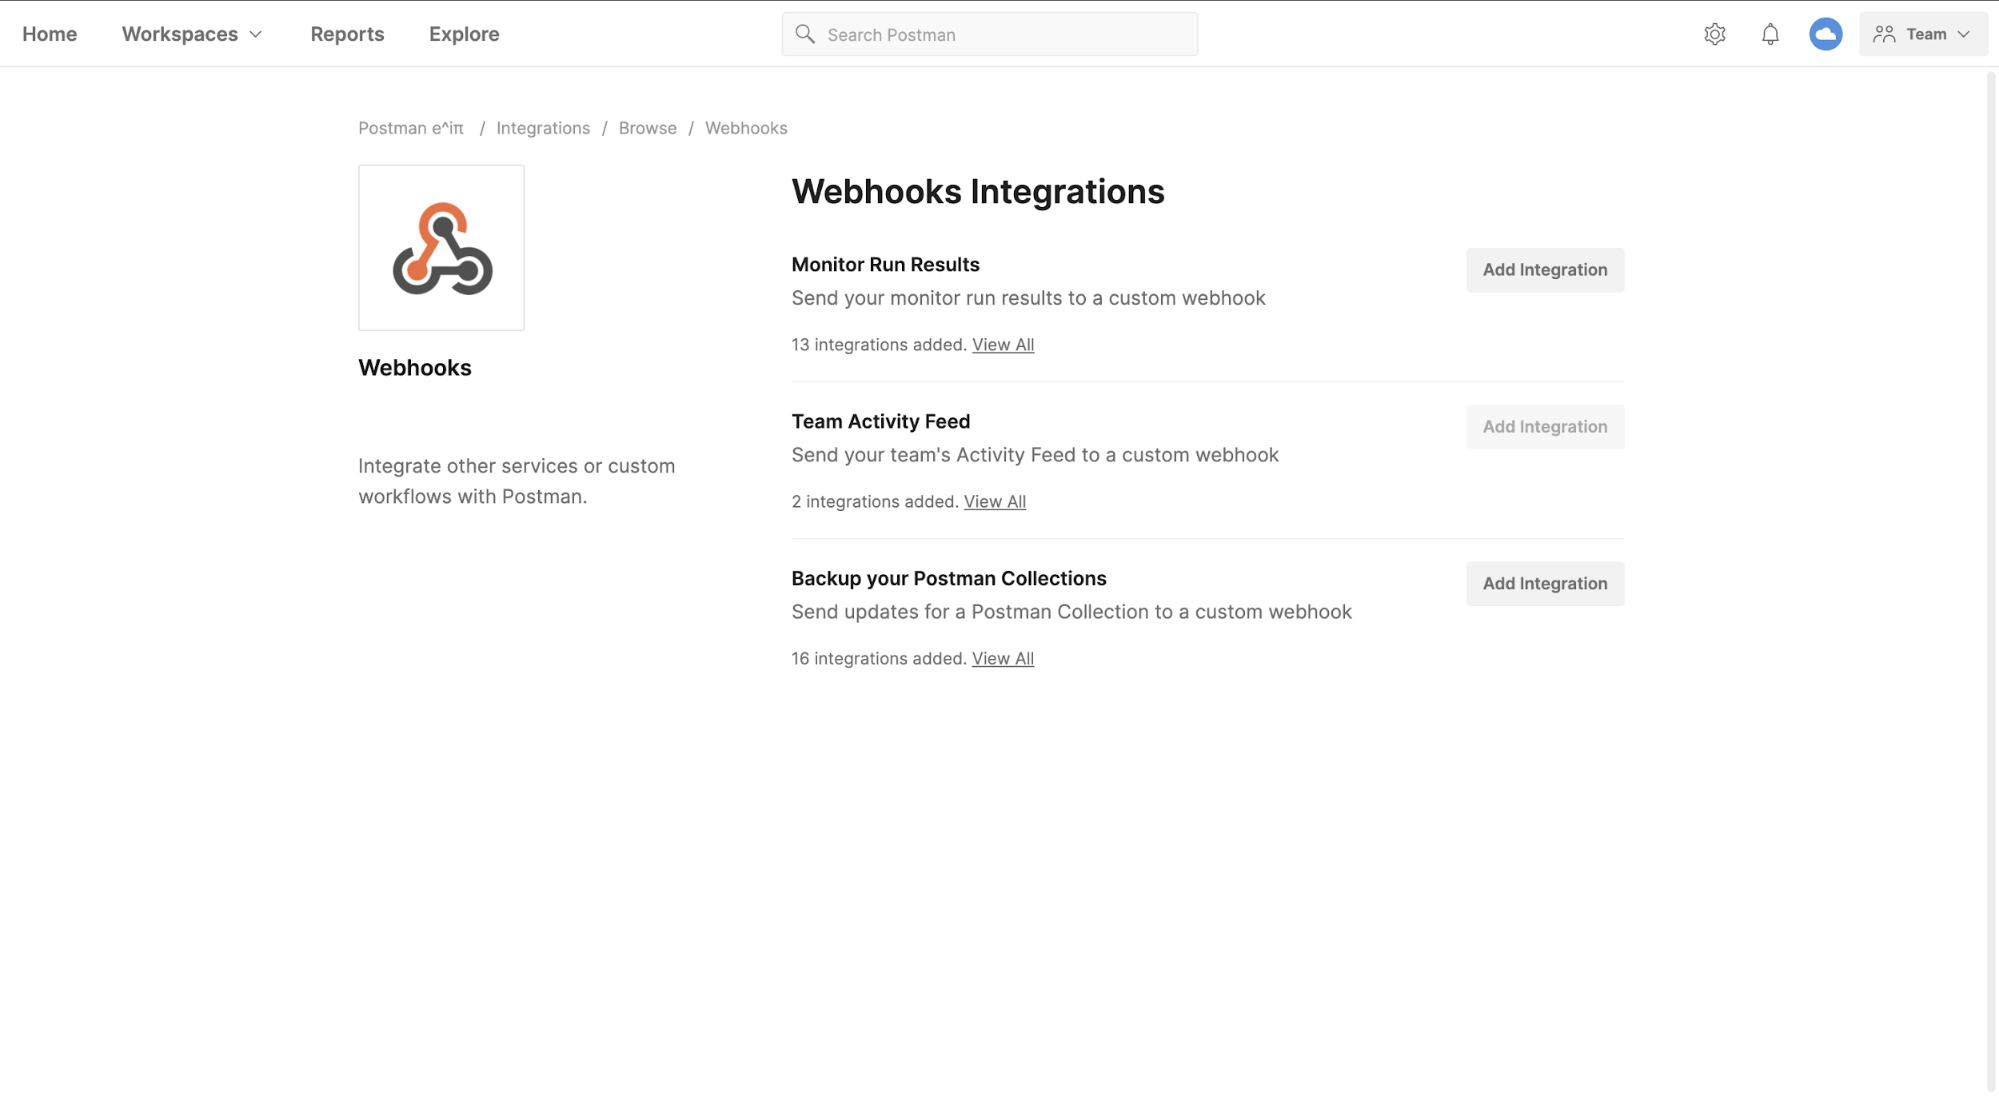 Webhooks Integrations details page in Postman